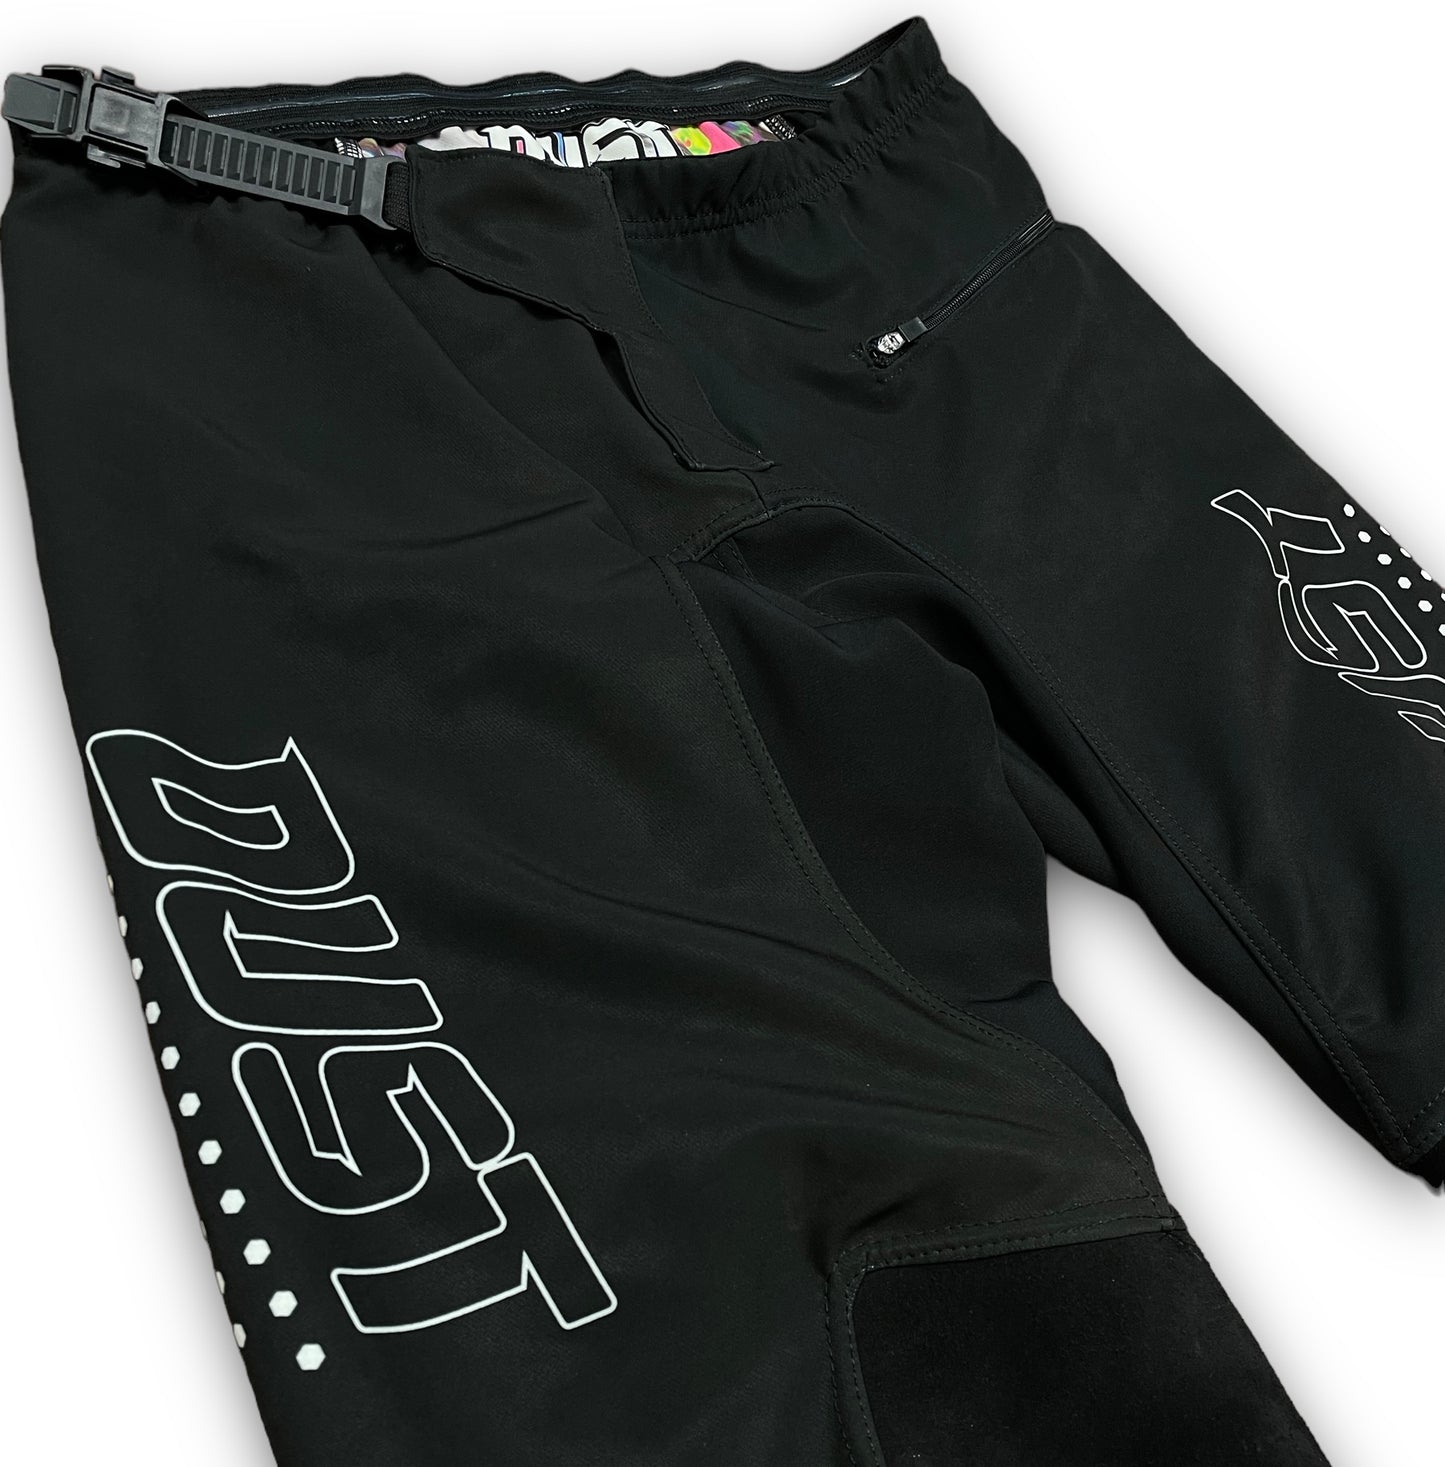 Motocross Suit | California Vibes / Black motocross pants | Enduro equipment